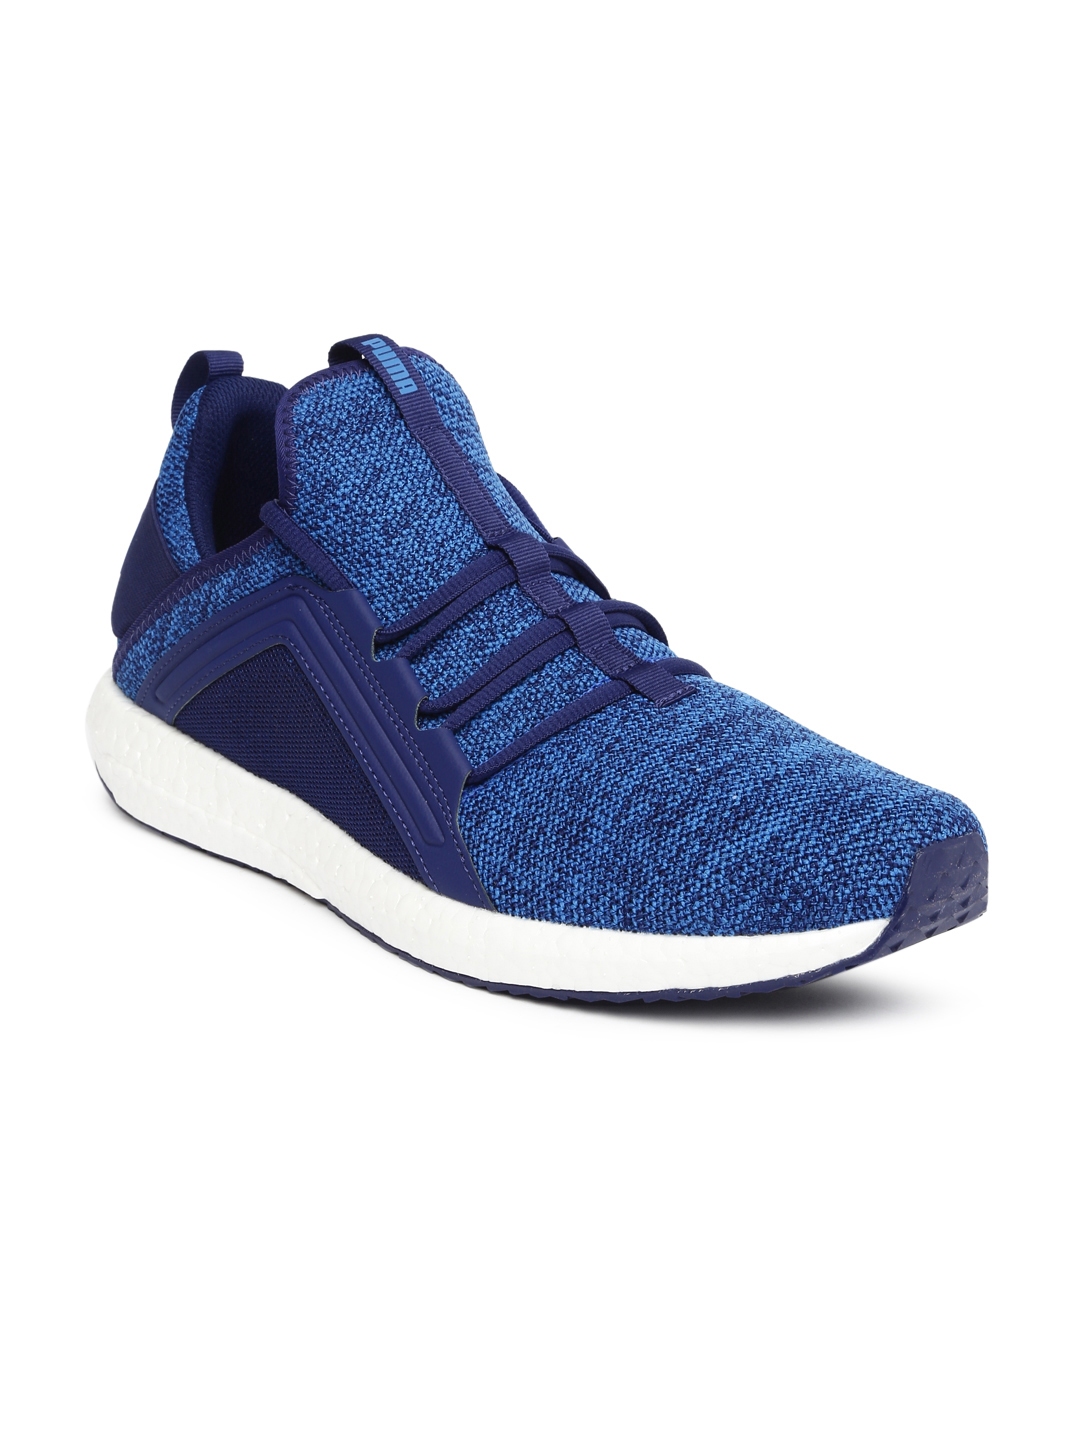 Blue Mega NRGY Knit Running Shoes 